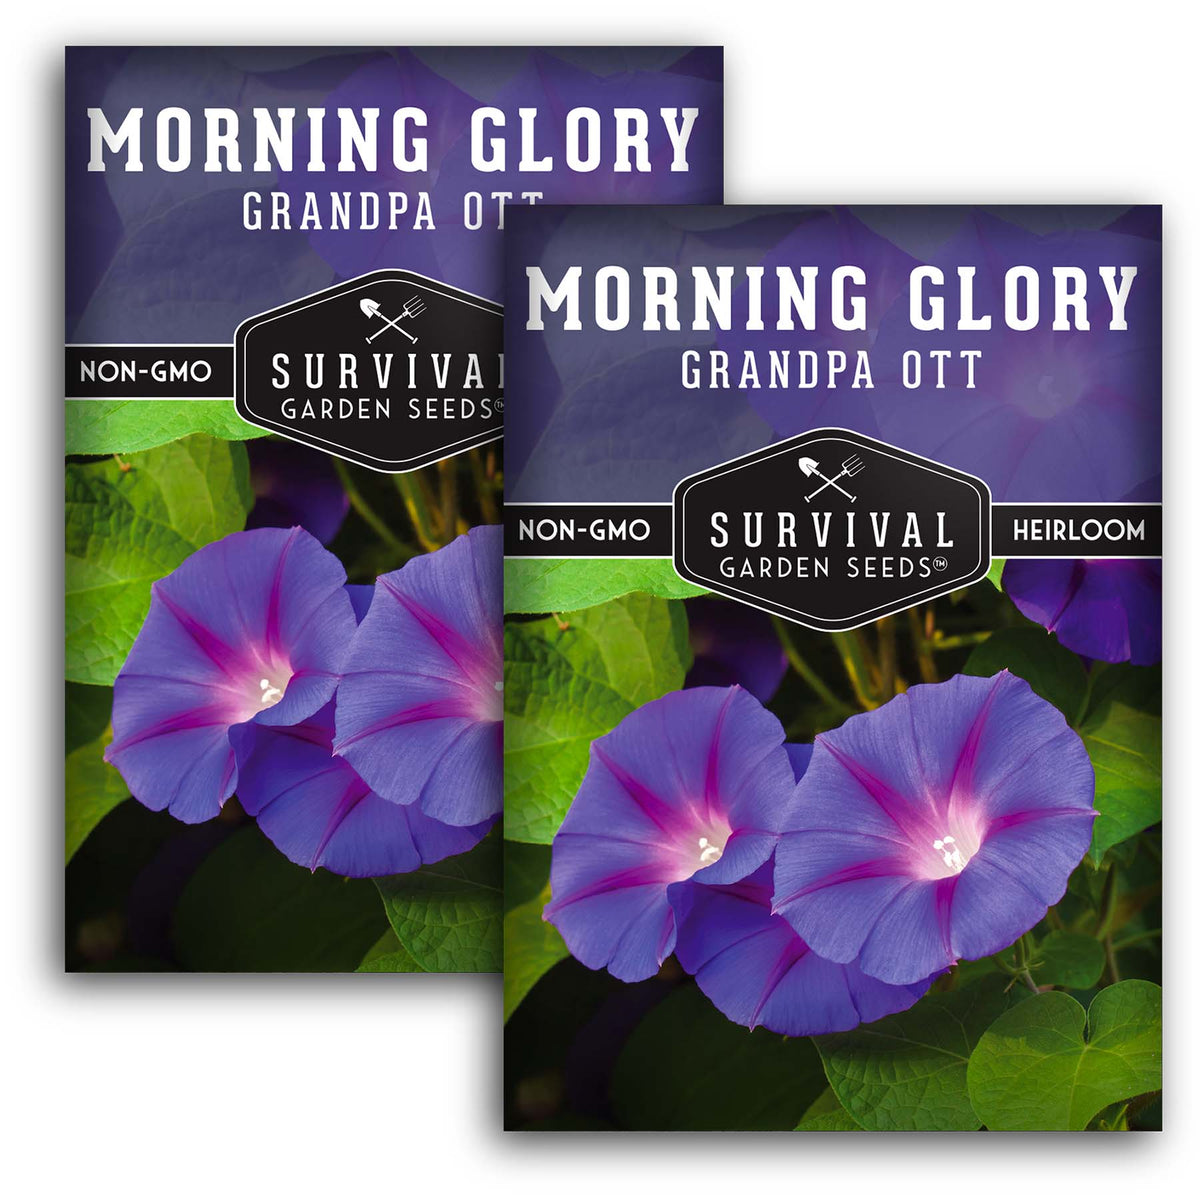 Grandpa Ott Morning Glory Seed